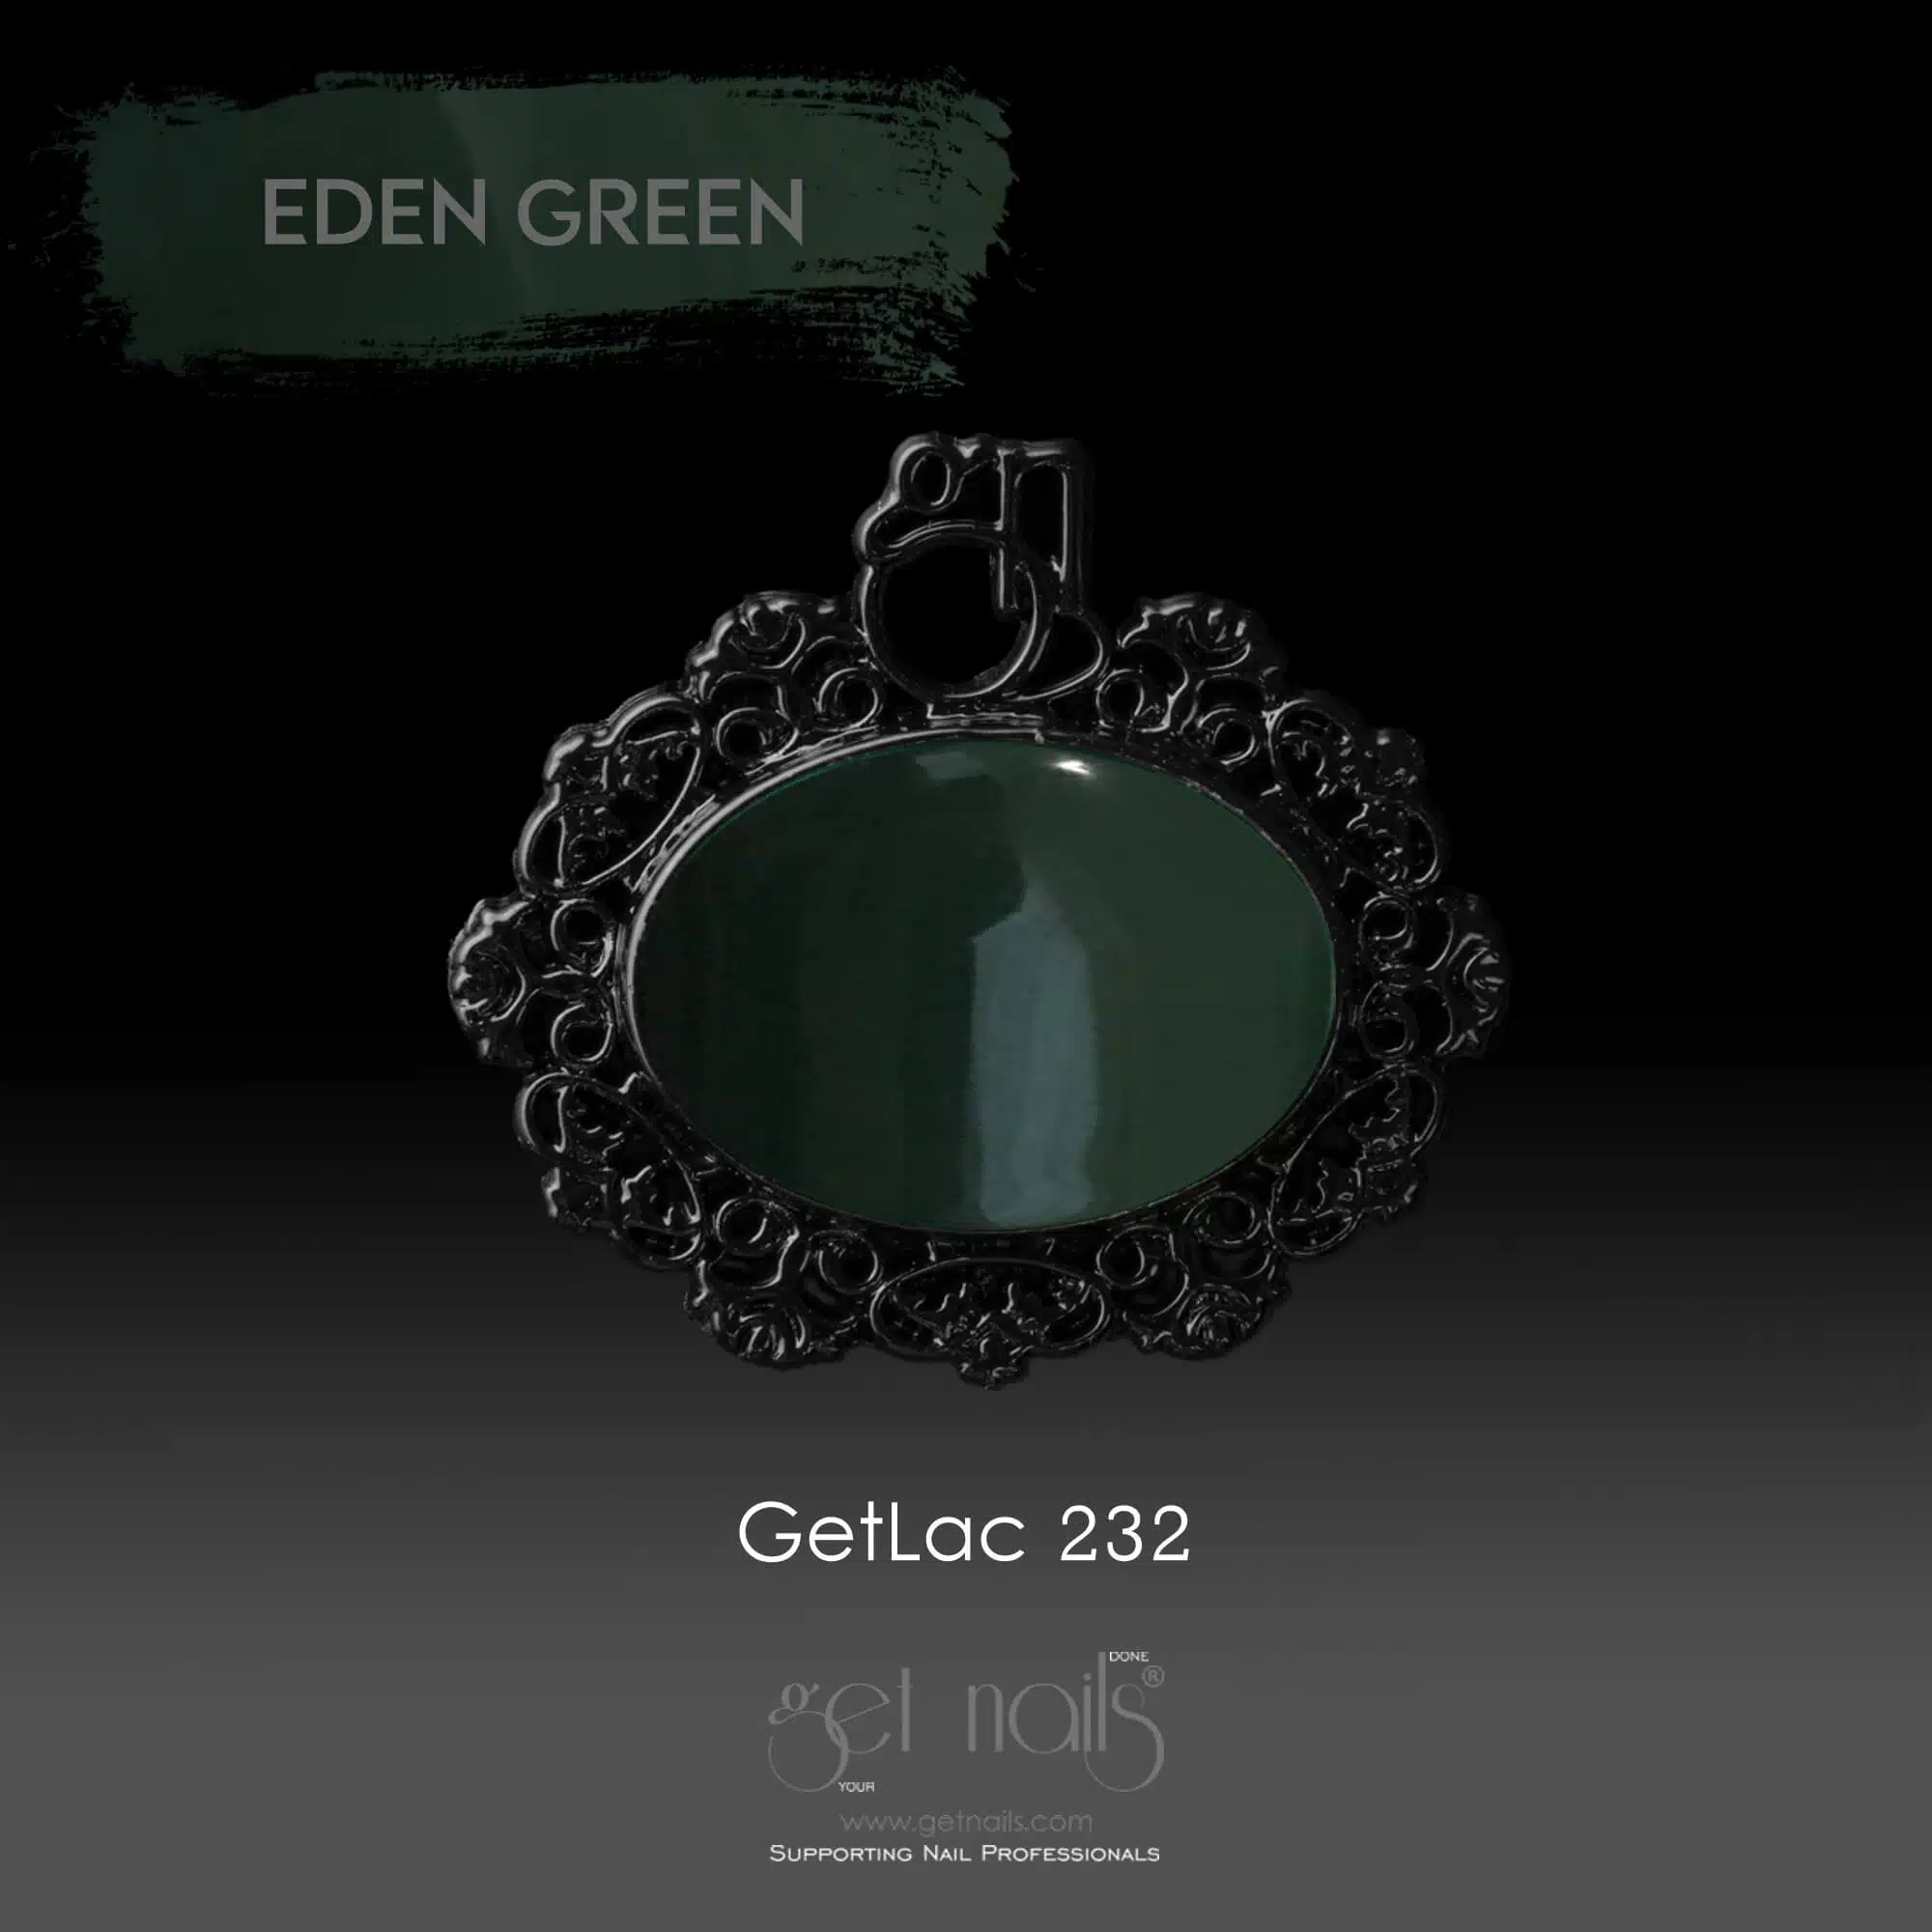 Get Nails Austria - GetLac 232 Eden Green 15g